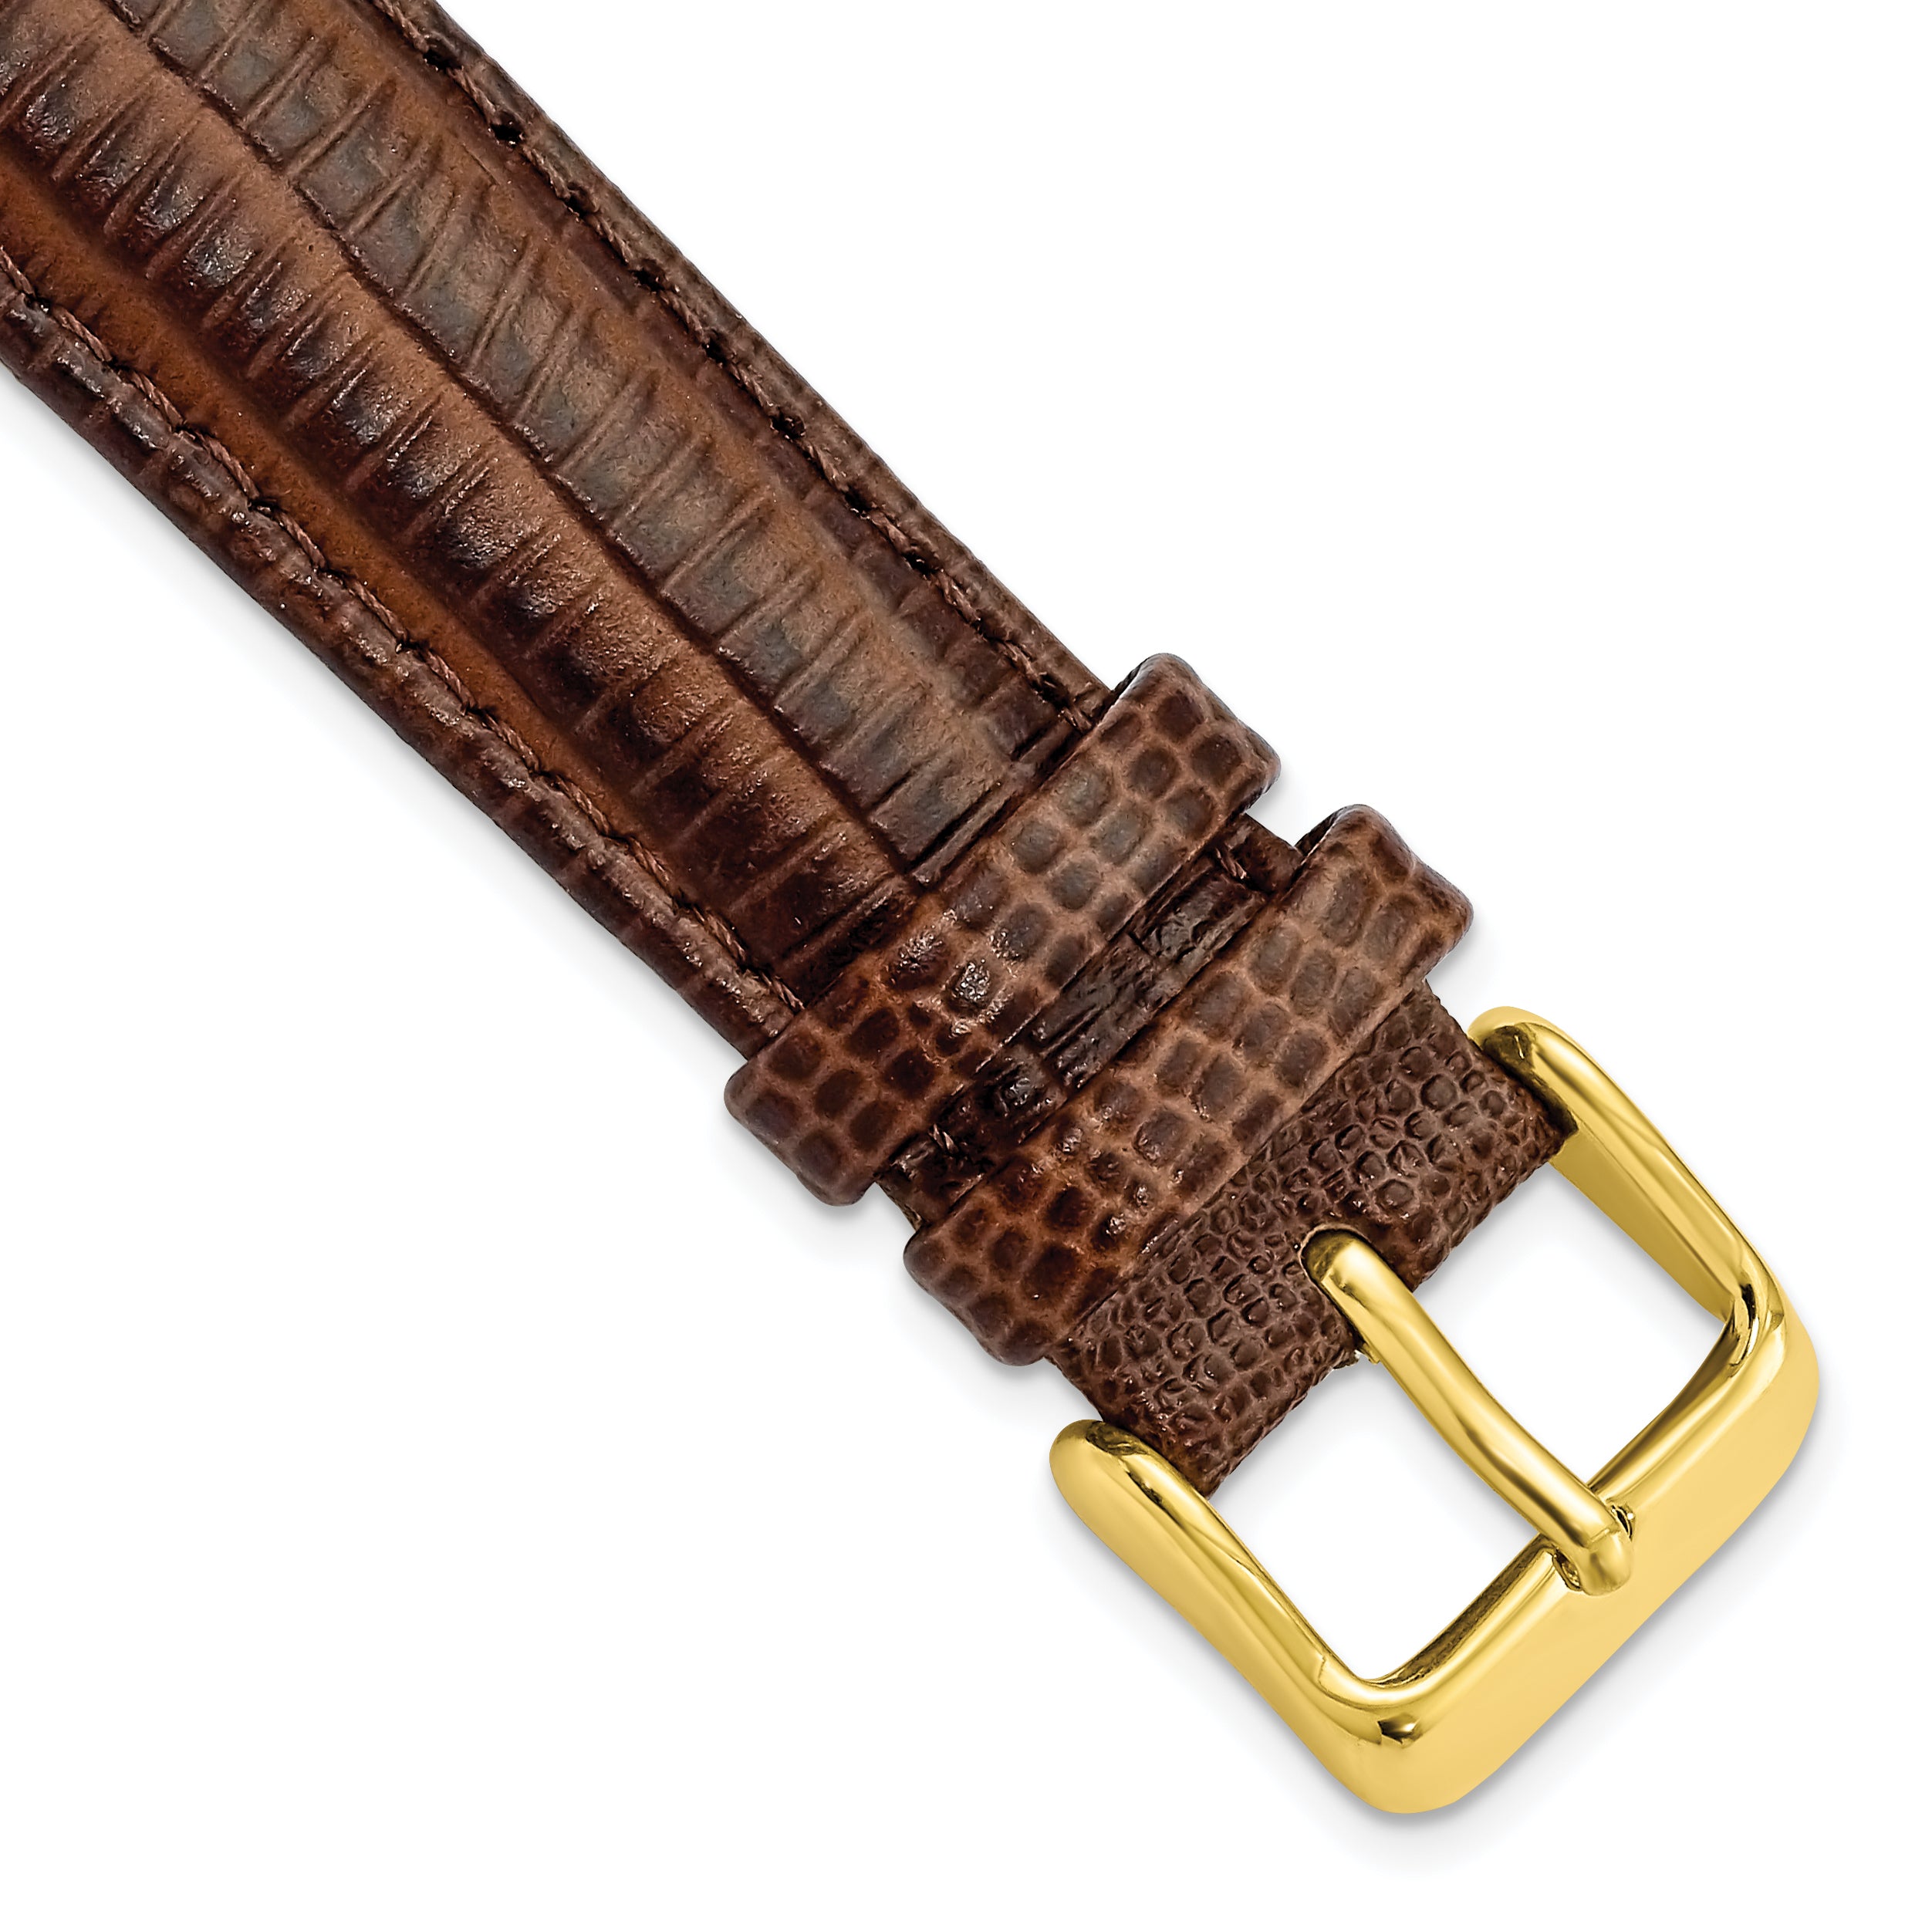 DeBeer 18mm Havana Teju Liz Grain Leather with Gold-tone Buckle 7.5 inch Watch Band